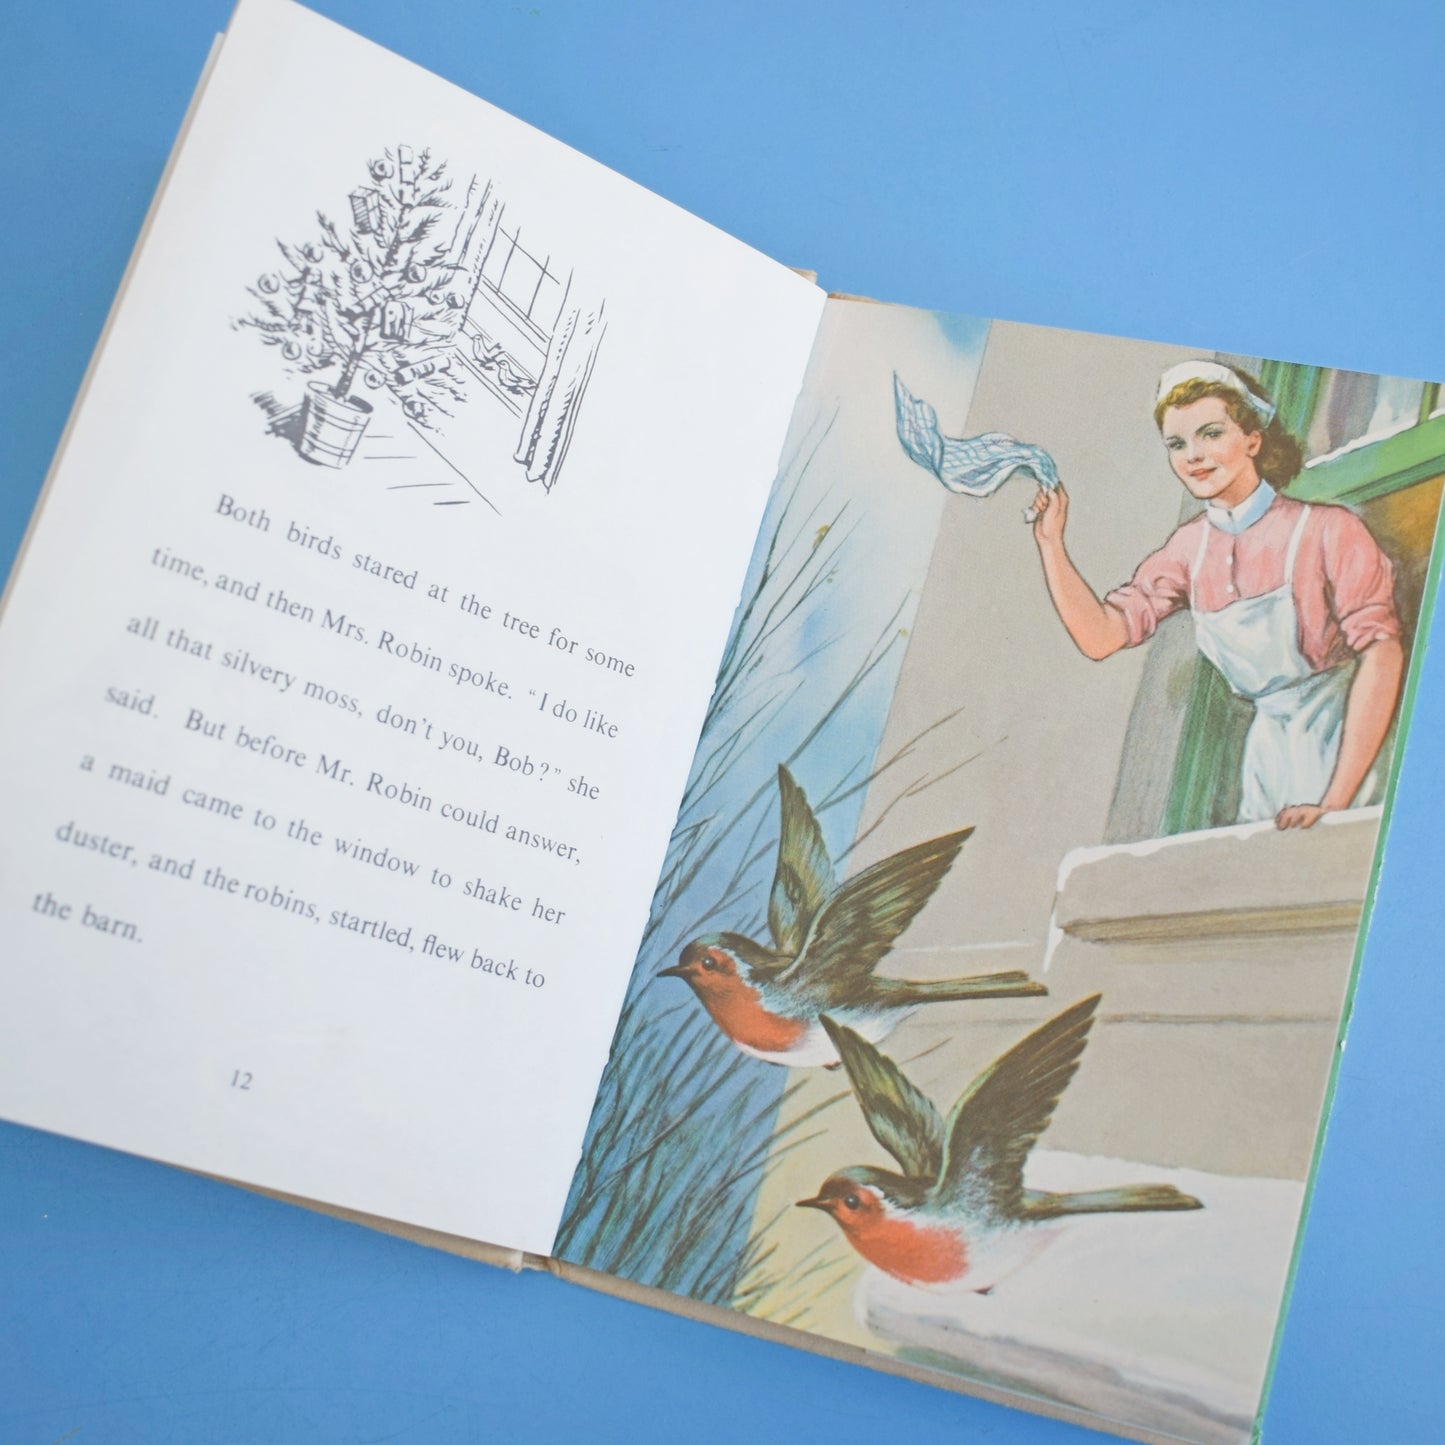 Vintage Ladybird Books - Wise Robin, Ned, Mick, Pony